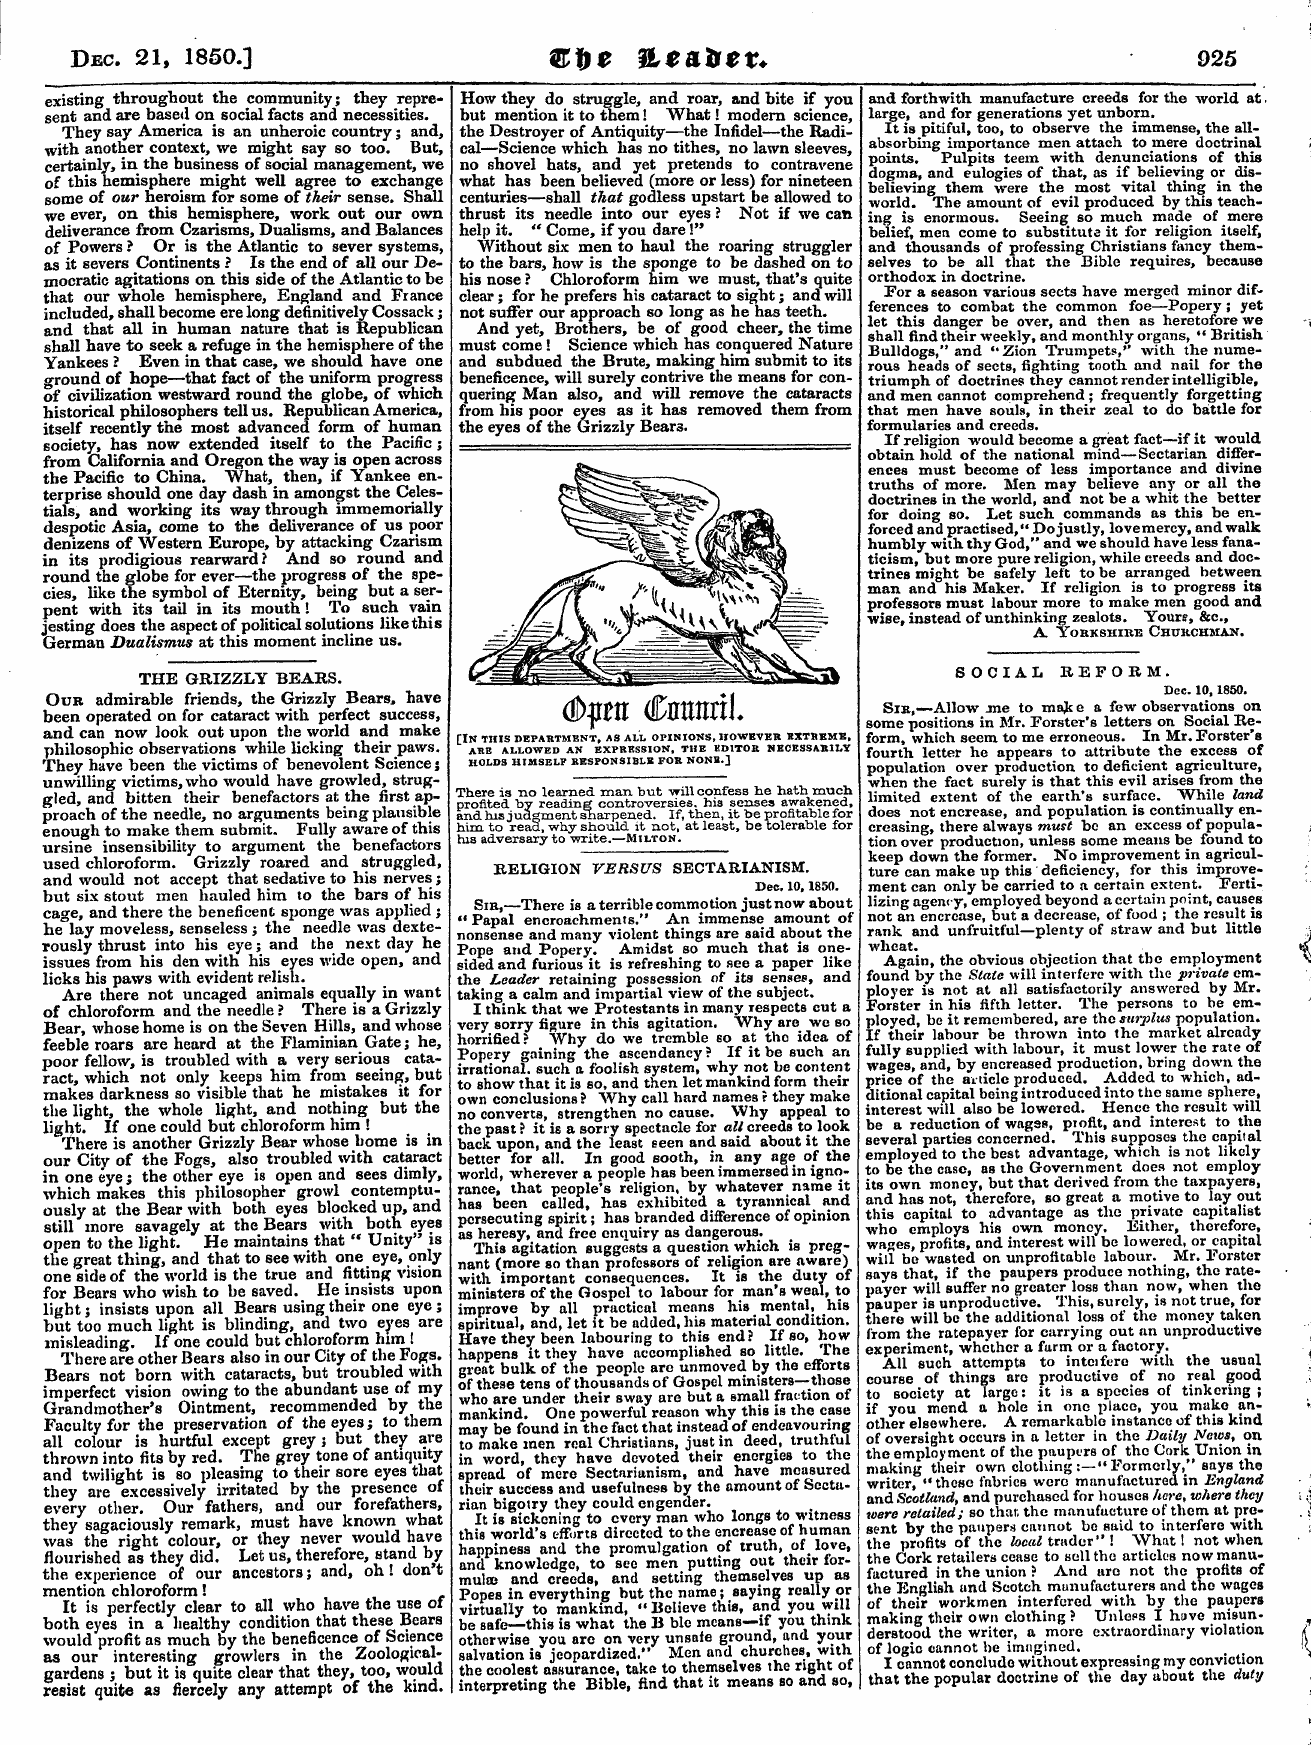 Leader (1850-1860): jS F Y, Country edition - Dec. 21, 1850.] Trff E Qleaiiev. 925